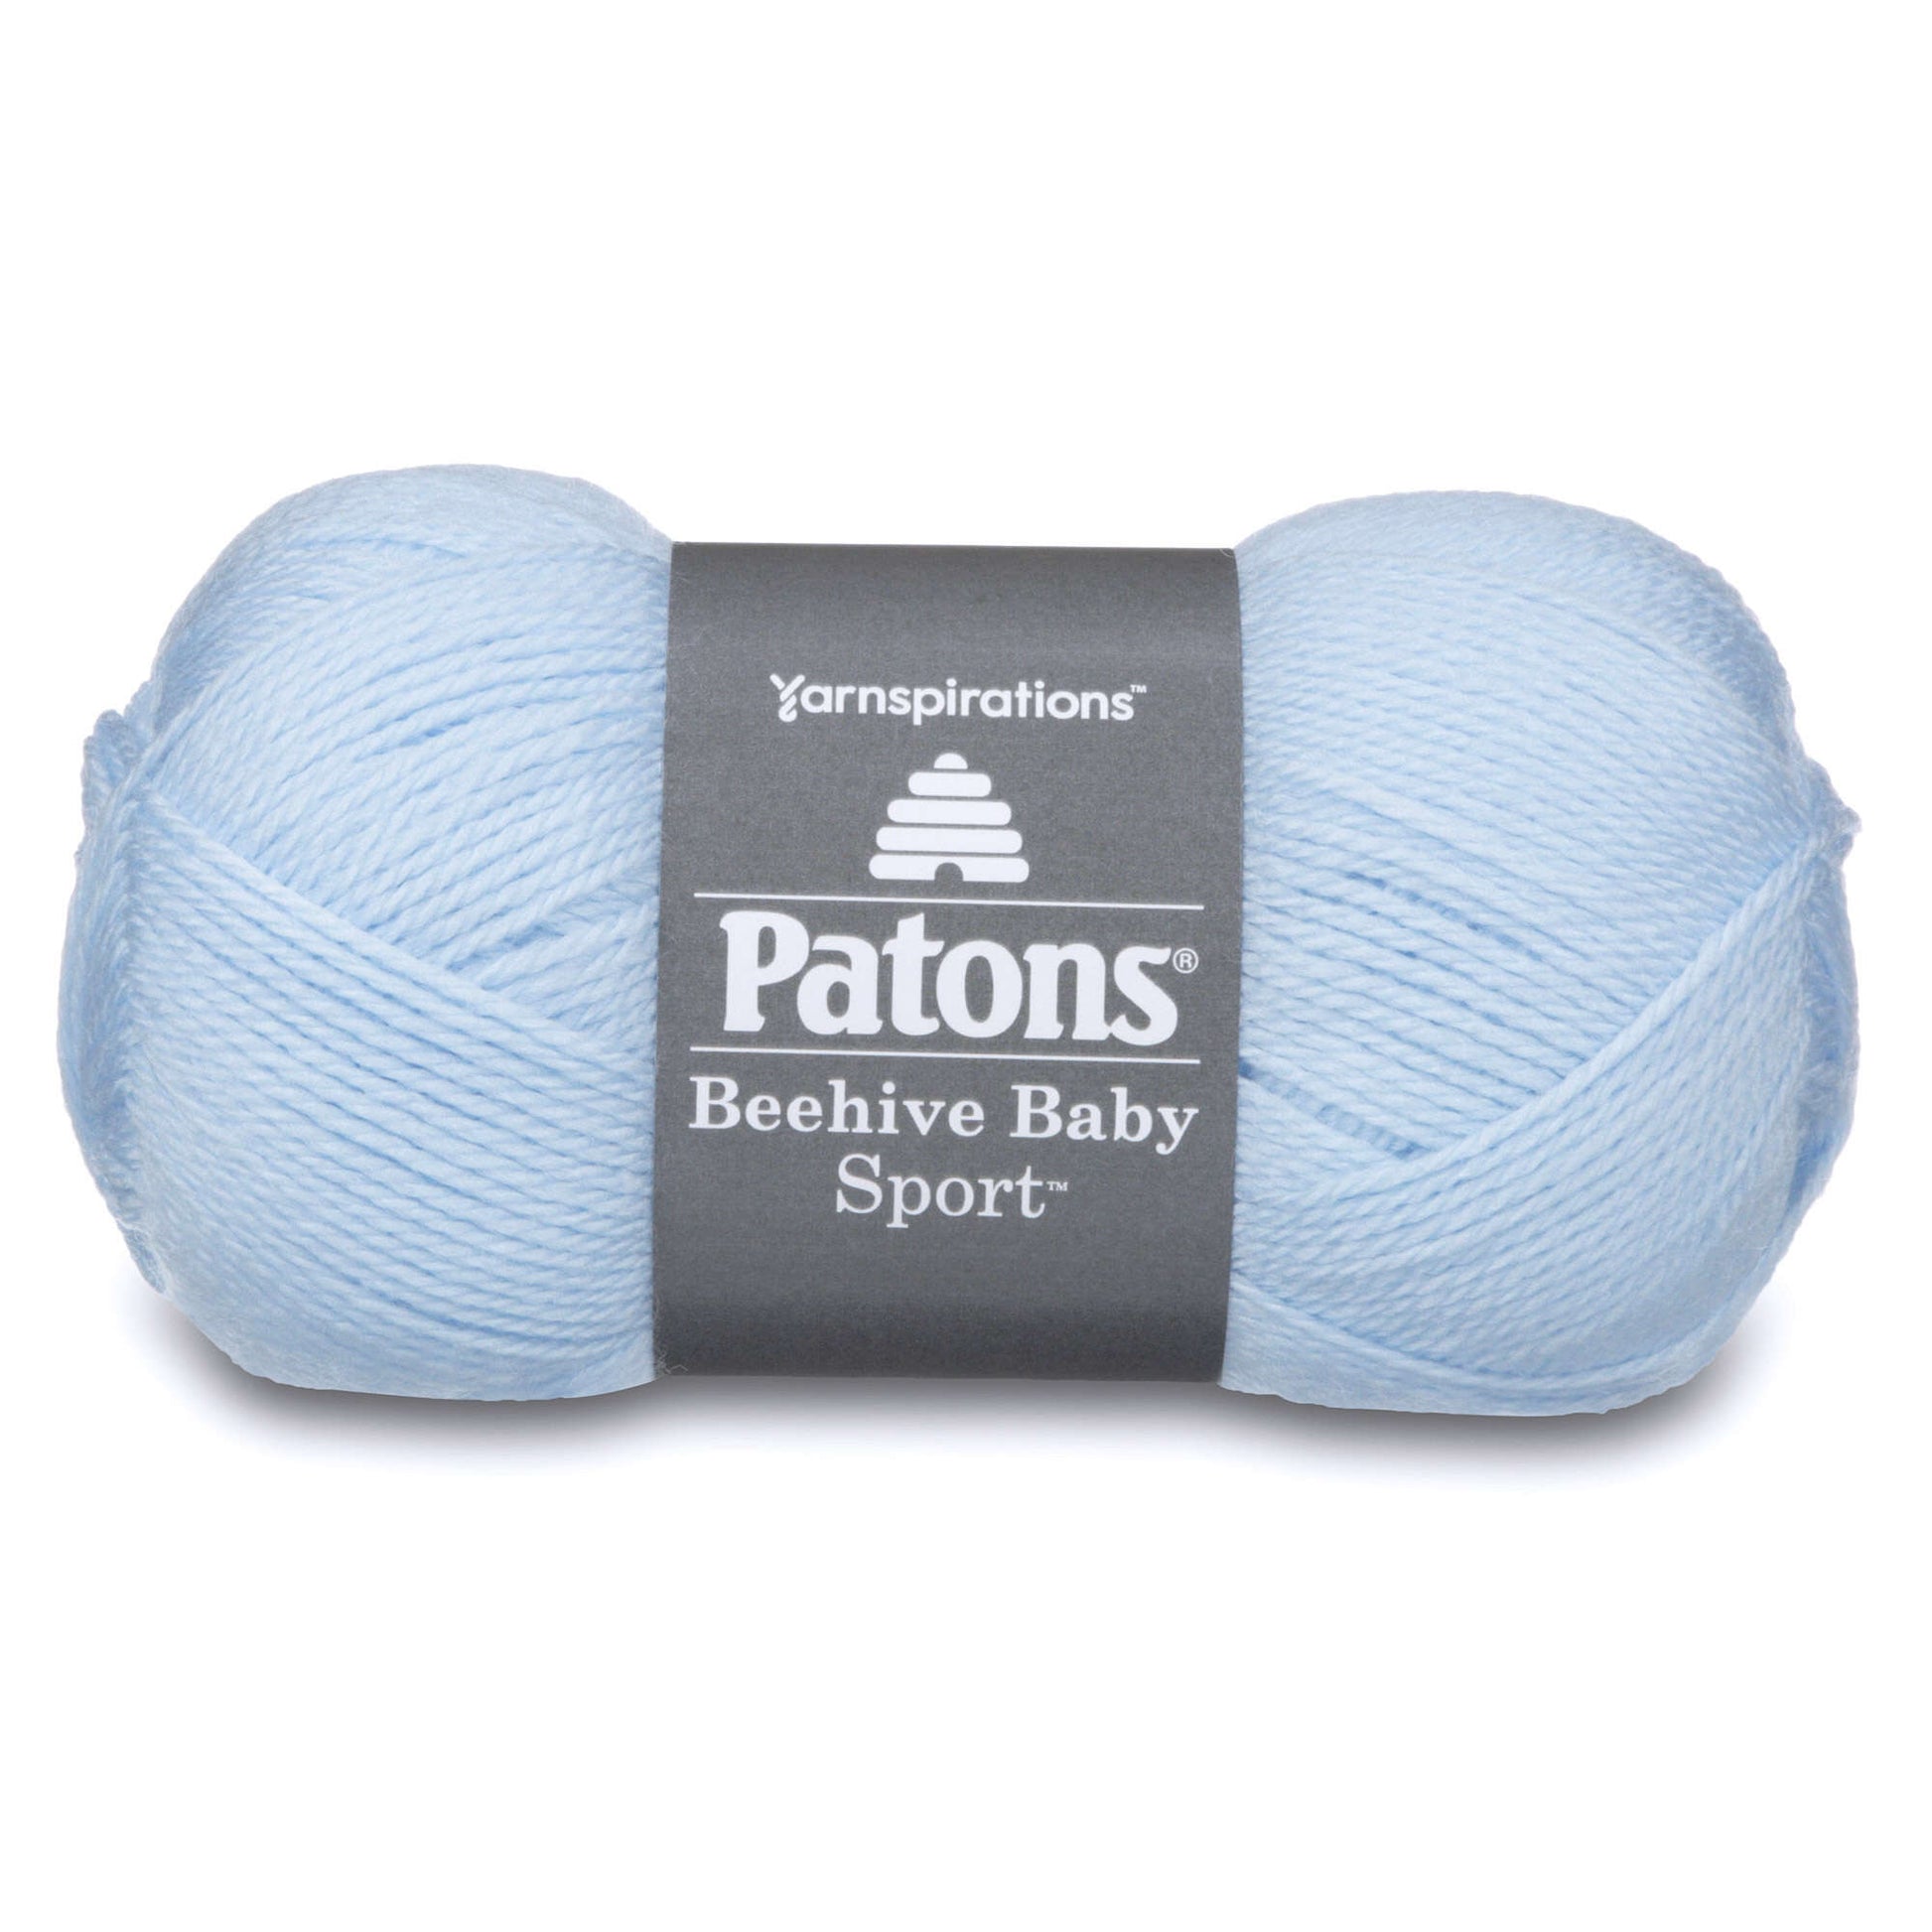 Patons Beehive Baby Sport Yarn